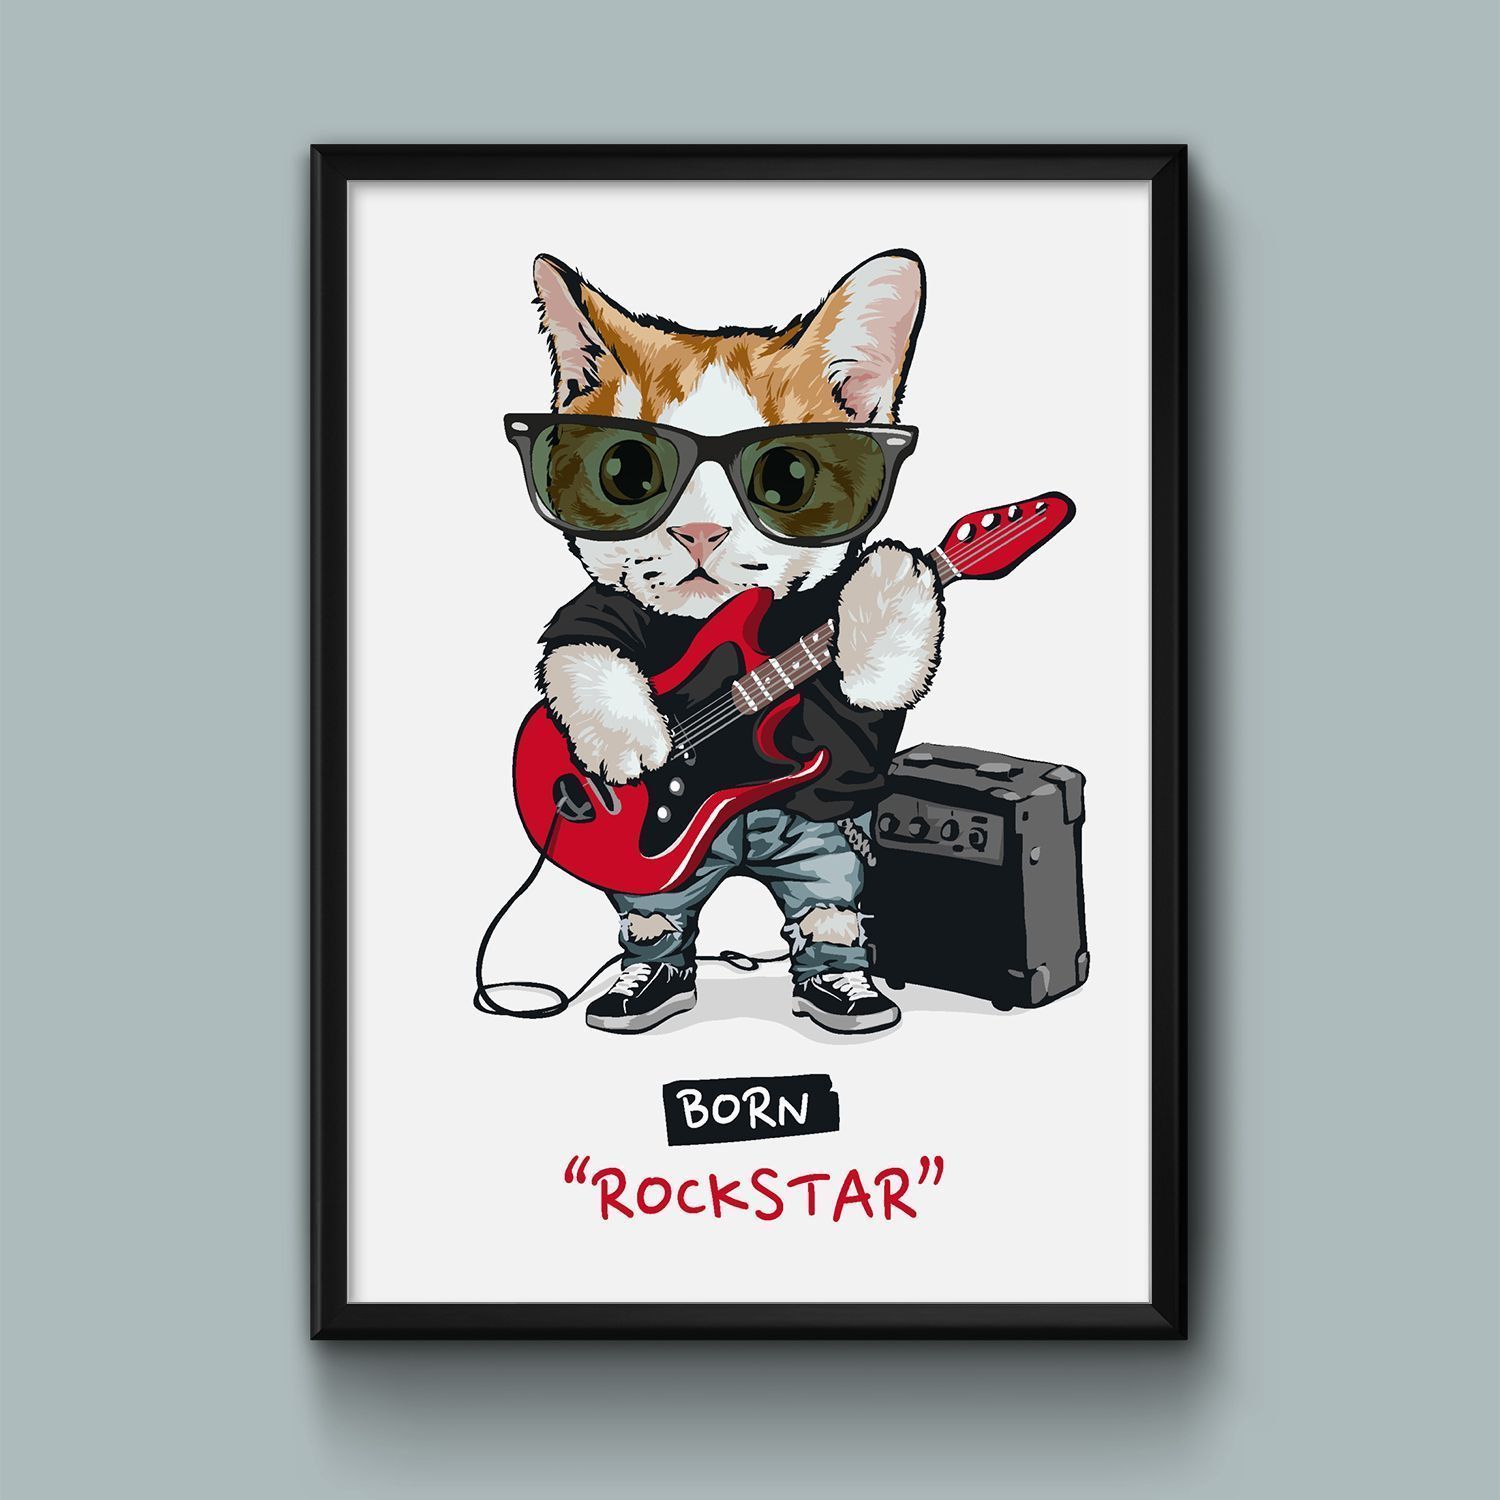 Постер "Born RockStar" от Интернет магазина Милота